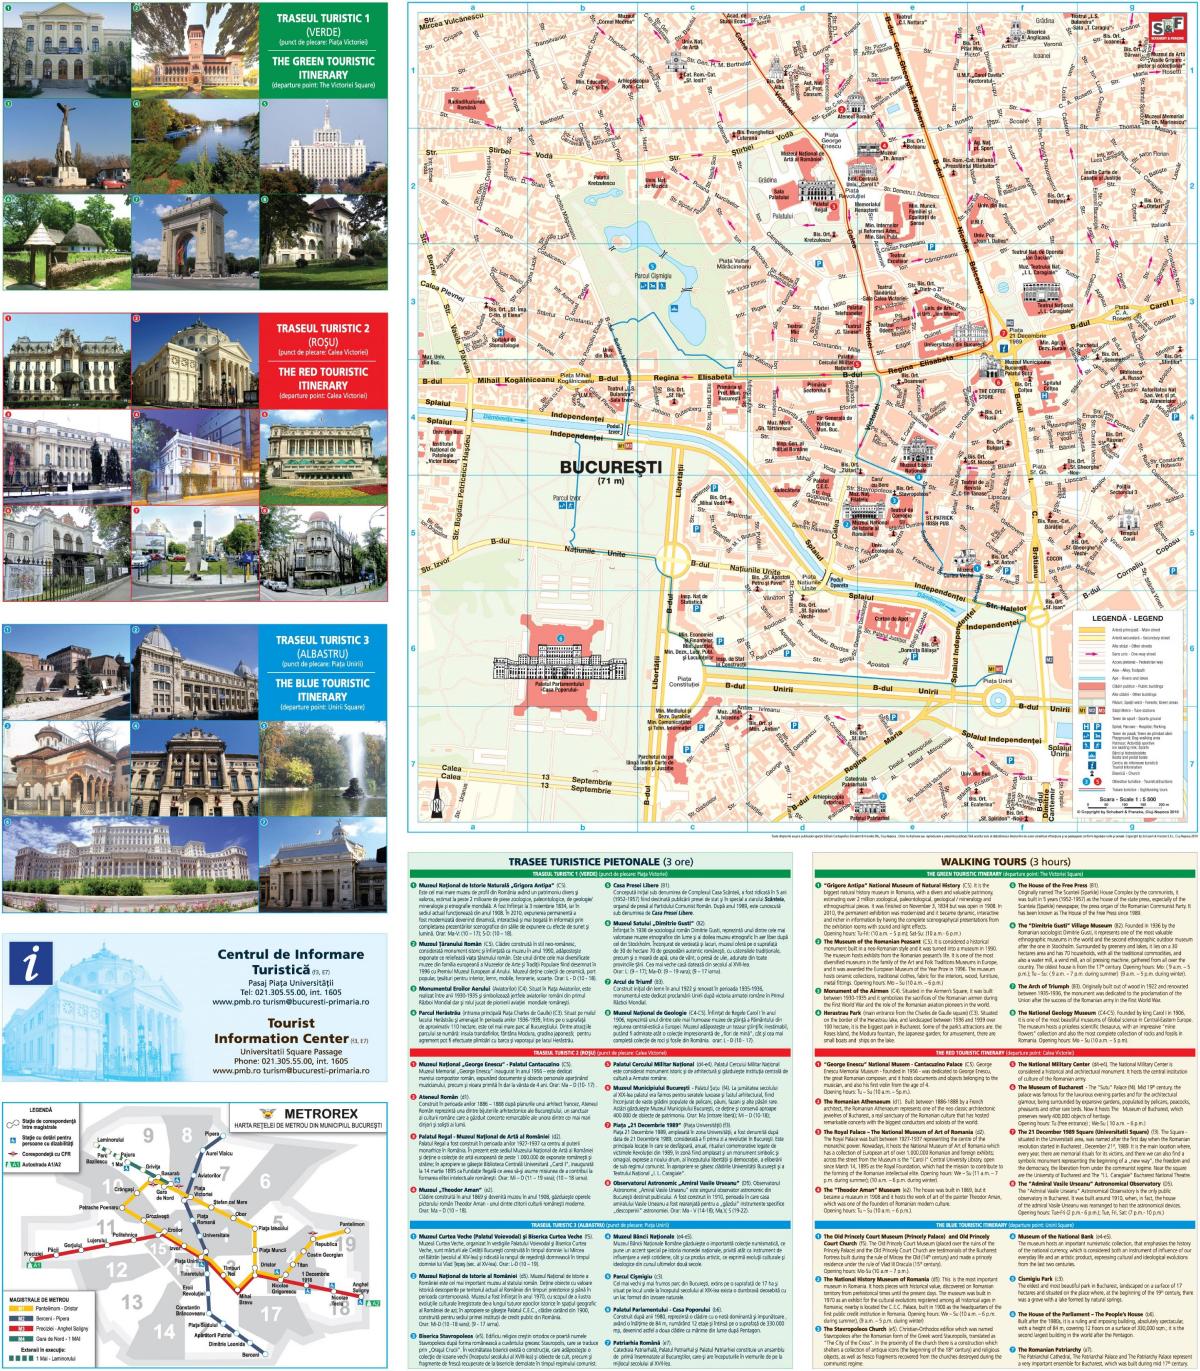 Mapa de lugares de interés de Bucarest